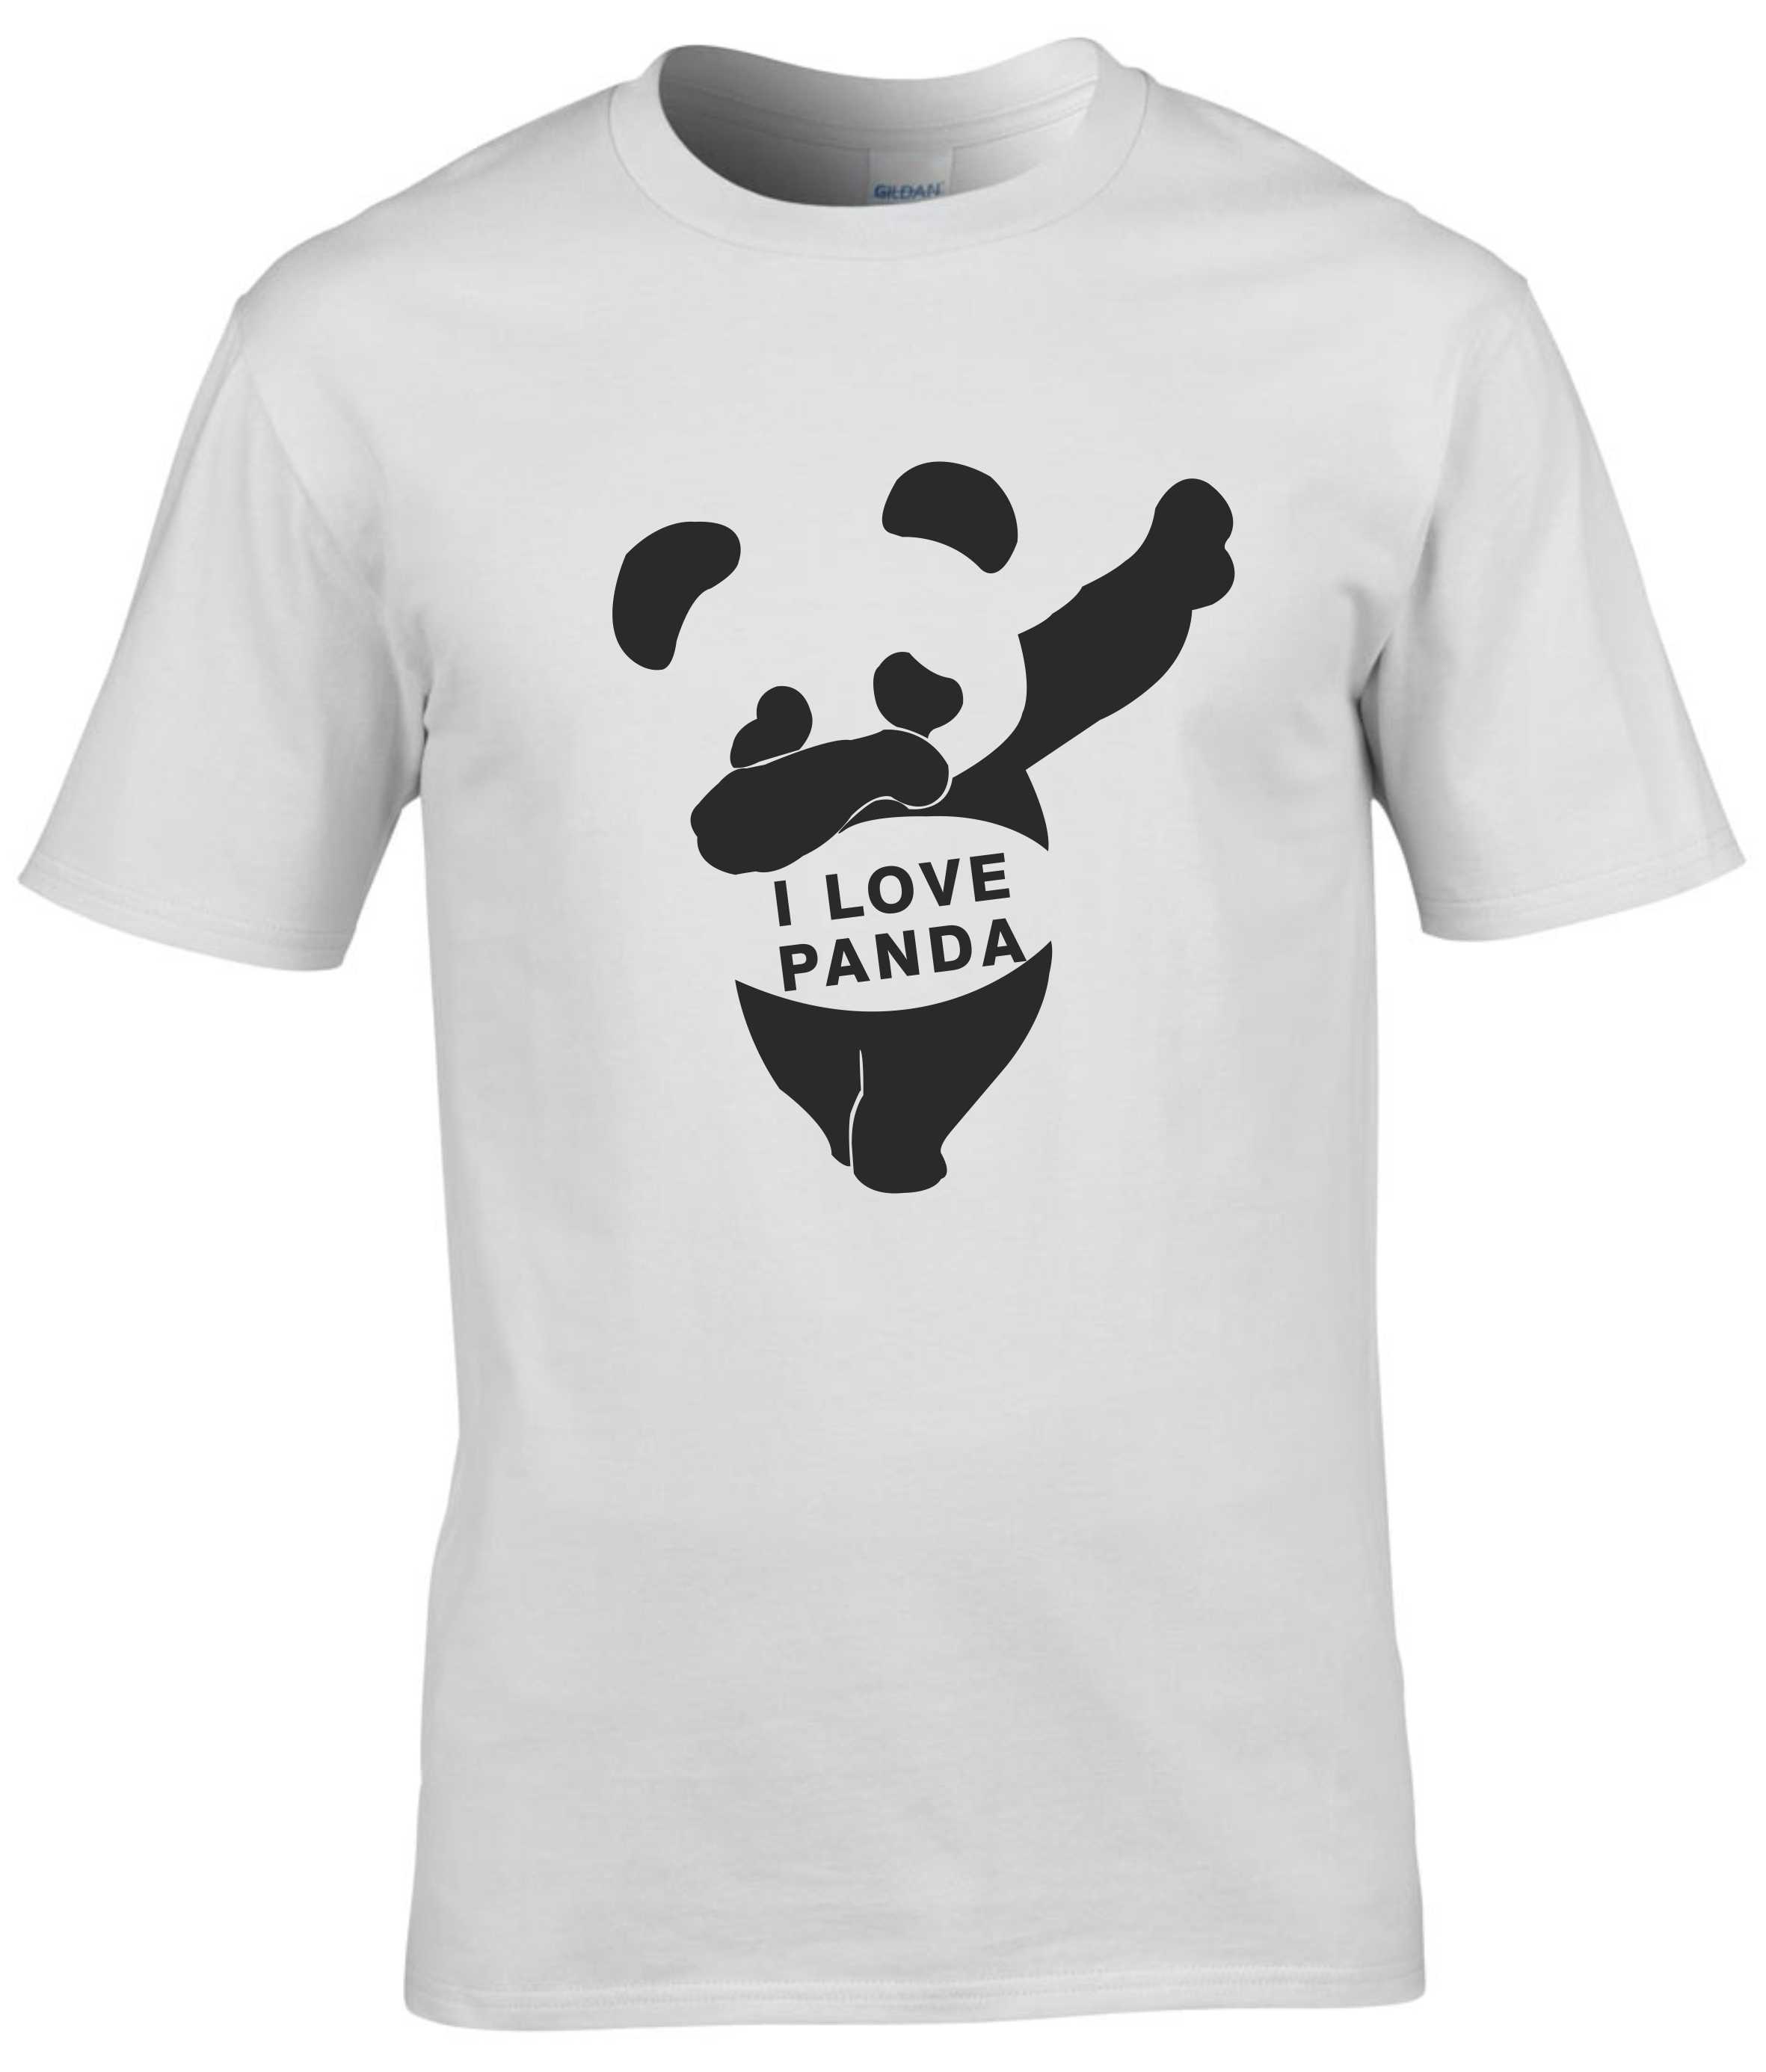 PANDA LOVER PÓLÓ